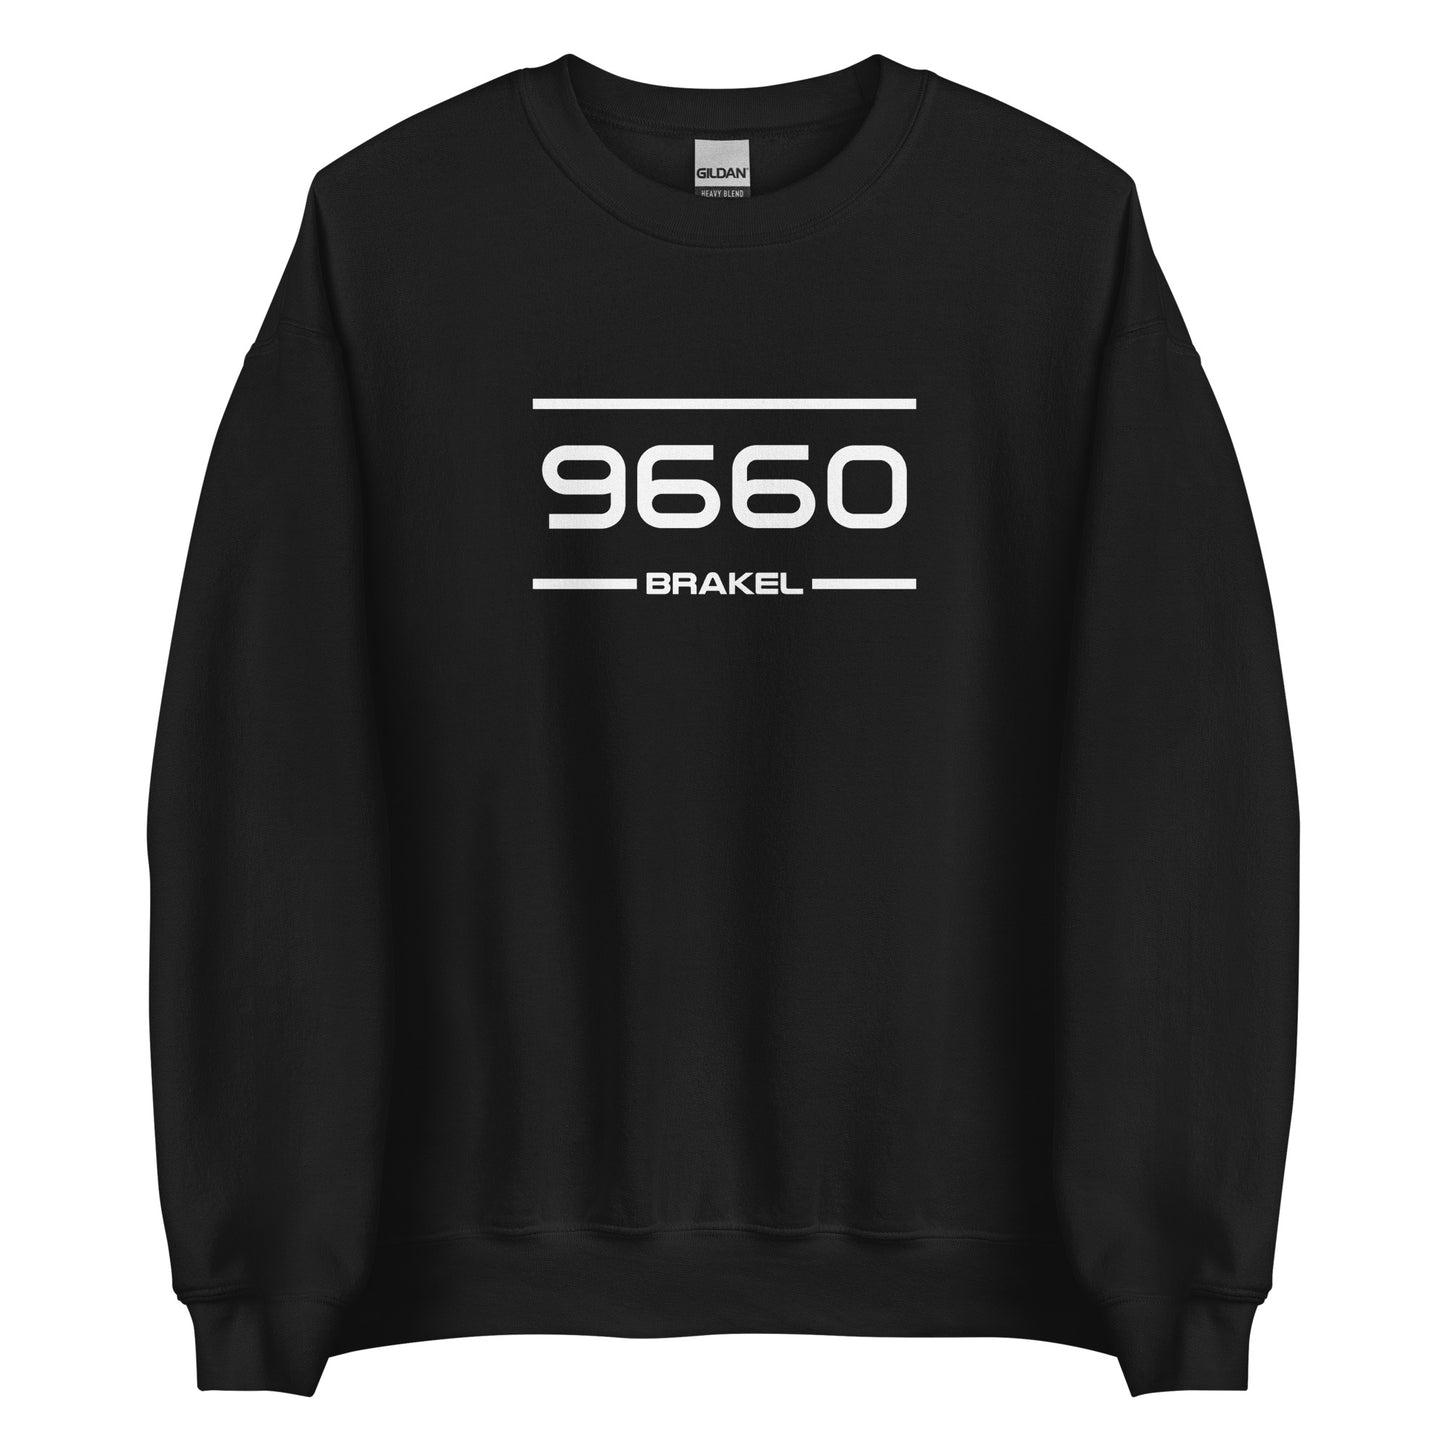 Sweater - 9660 - Brakel (M/V)